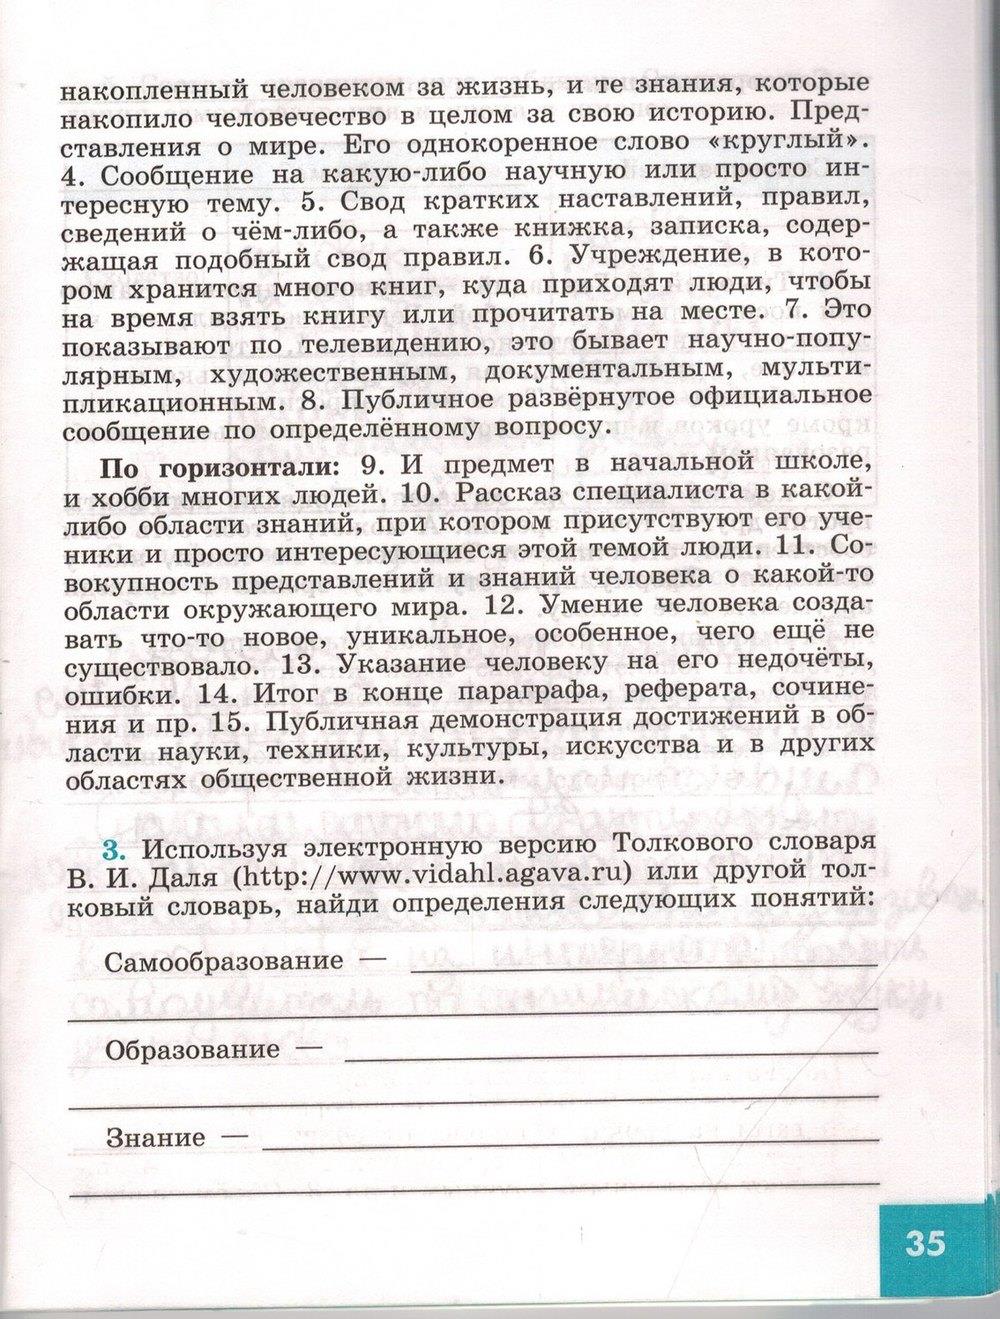 гдз 5 класс рабочая тетрадь страница 35 обществознание Иванова, Хотеенкова